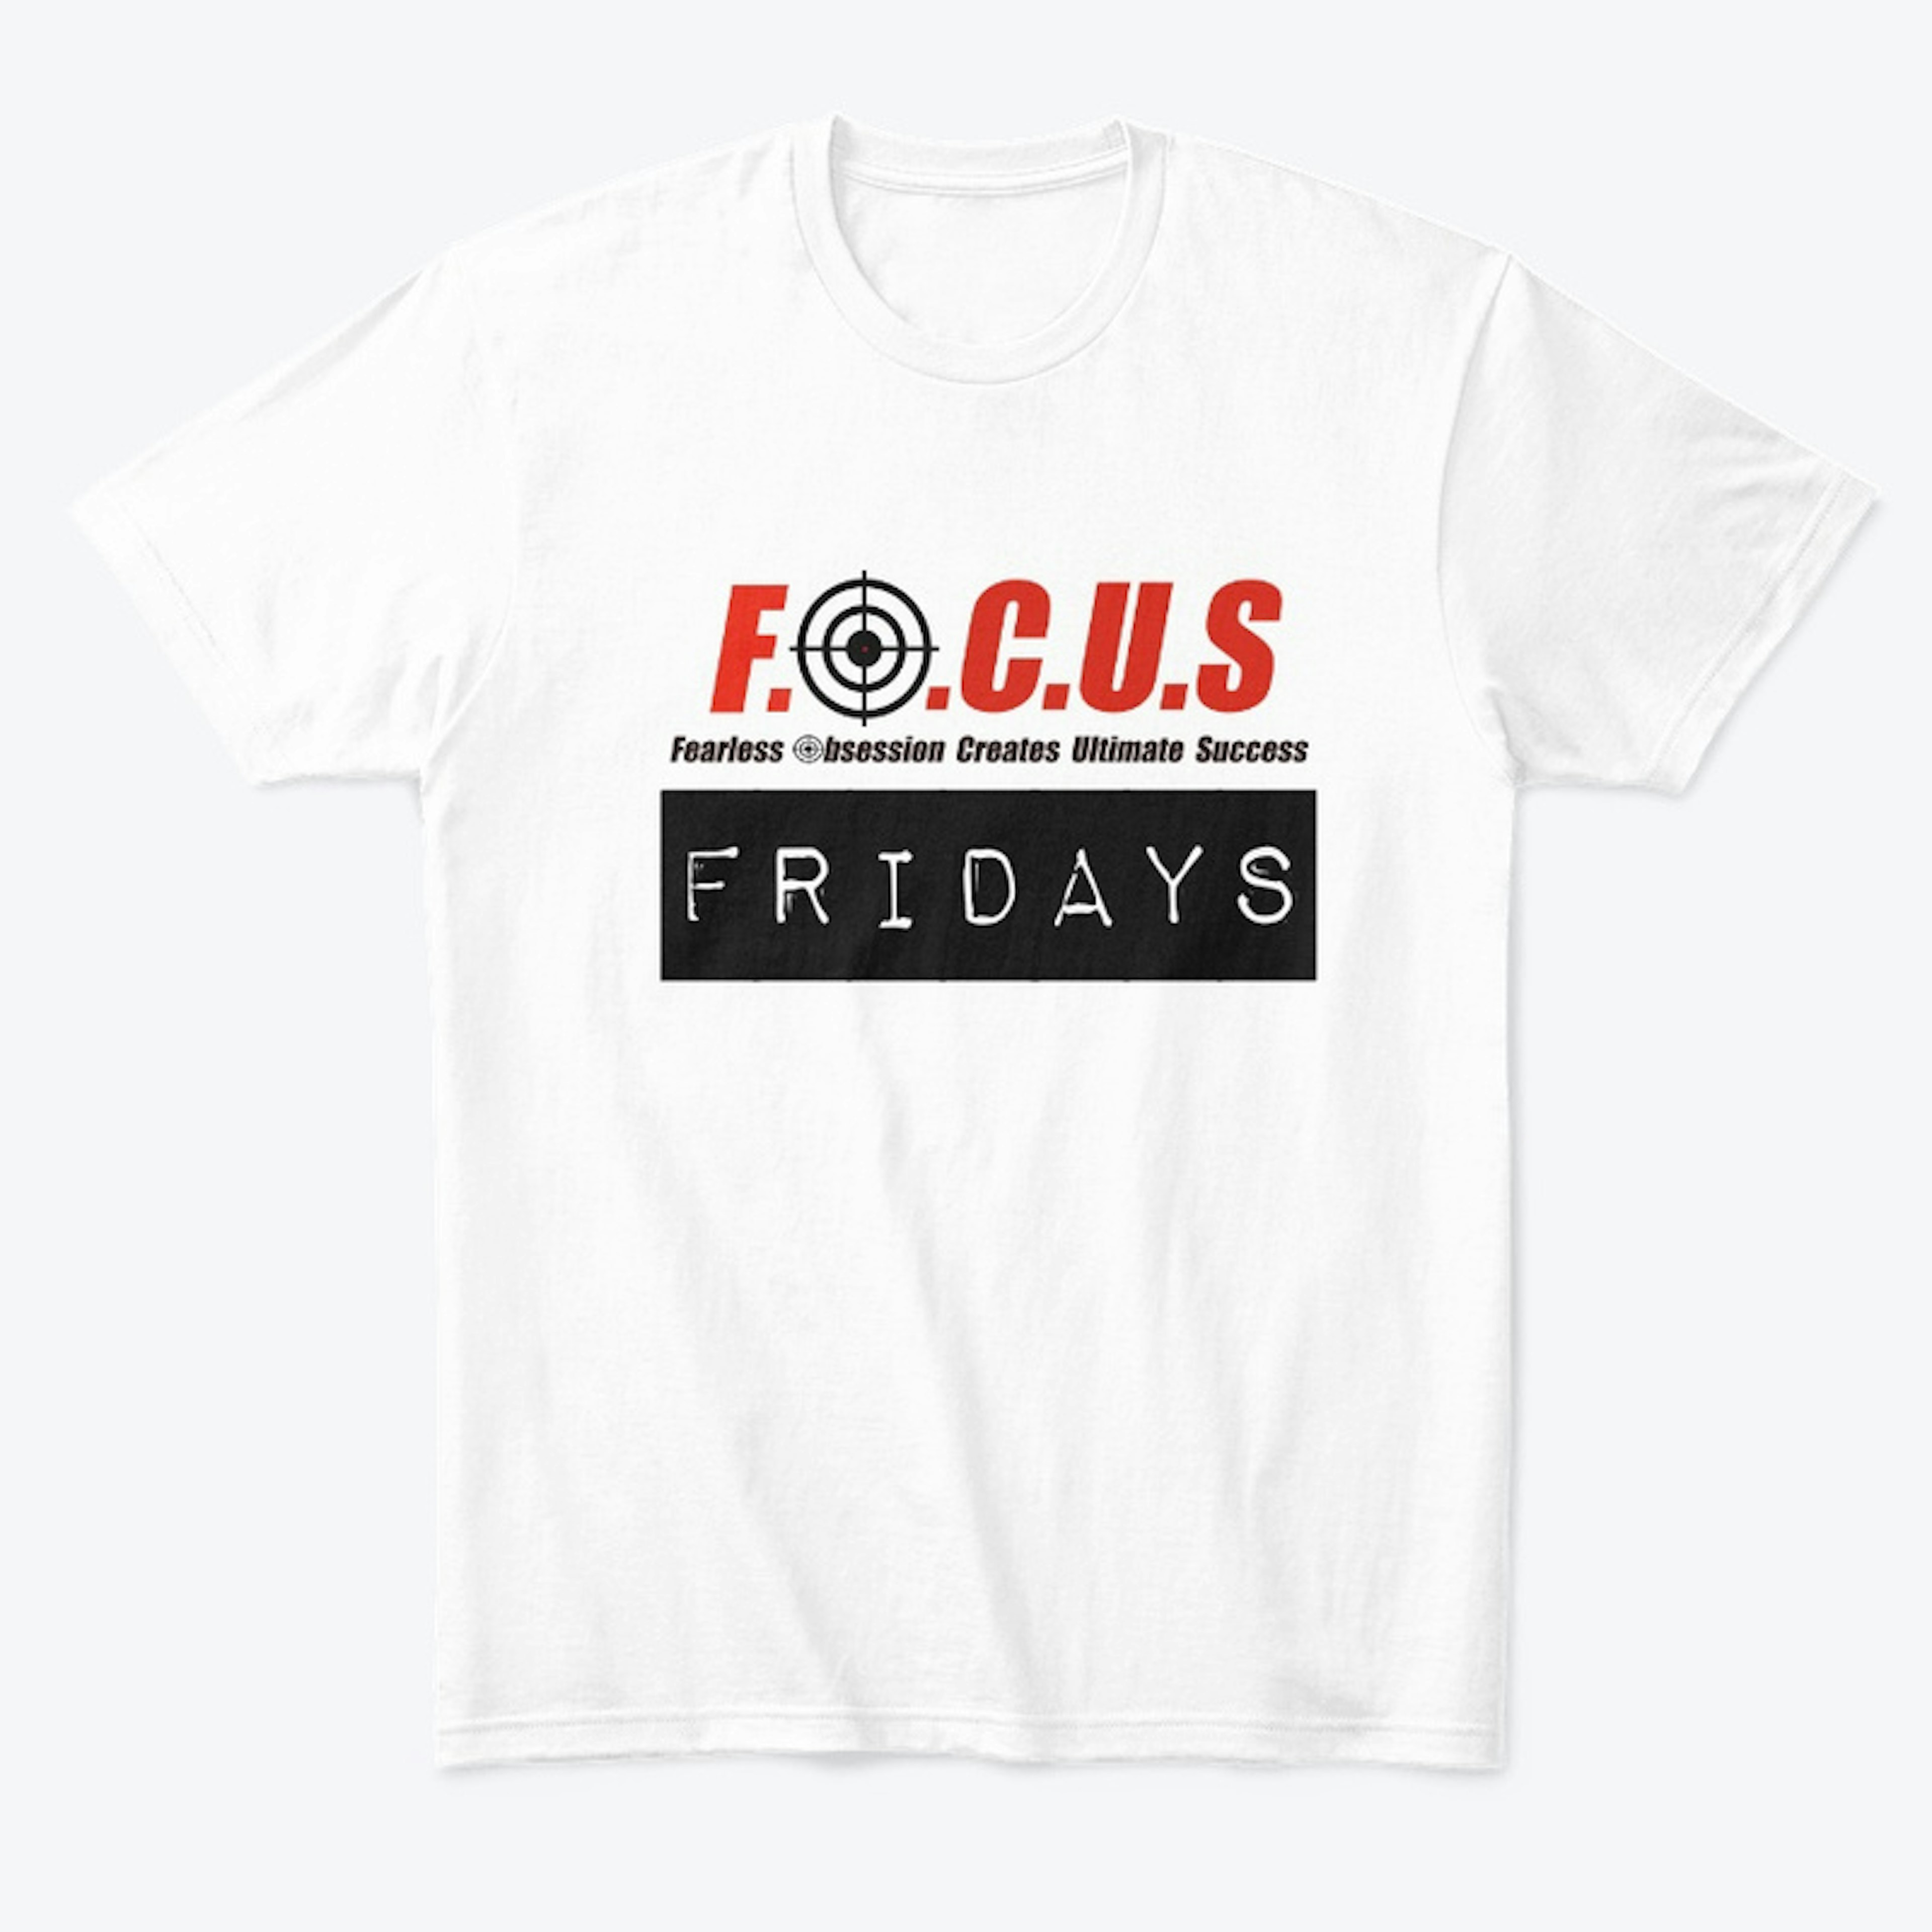 FOCUS Fridays